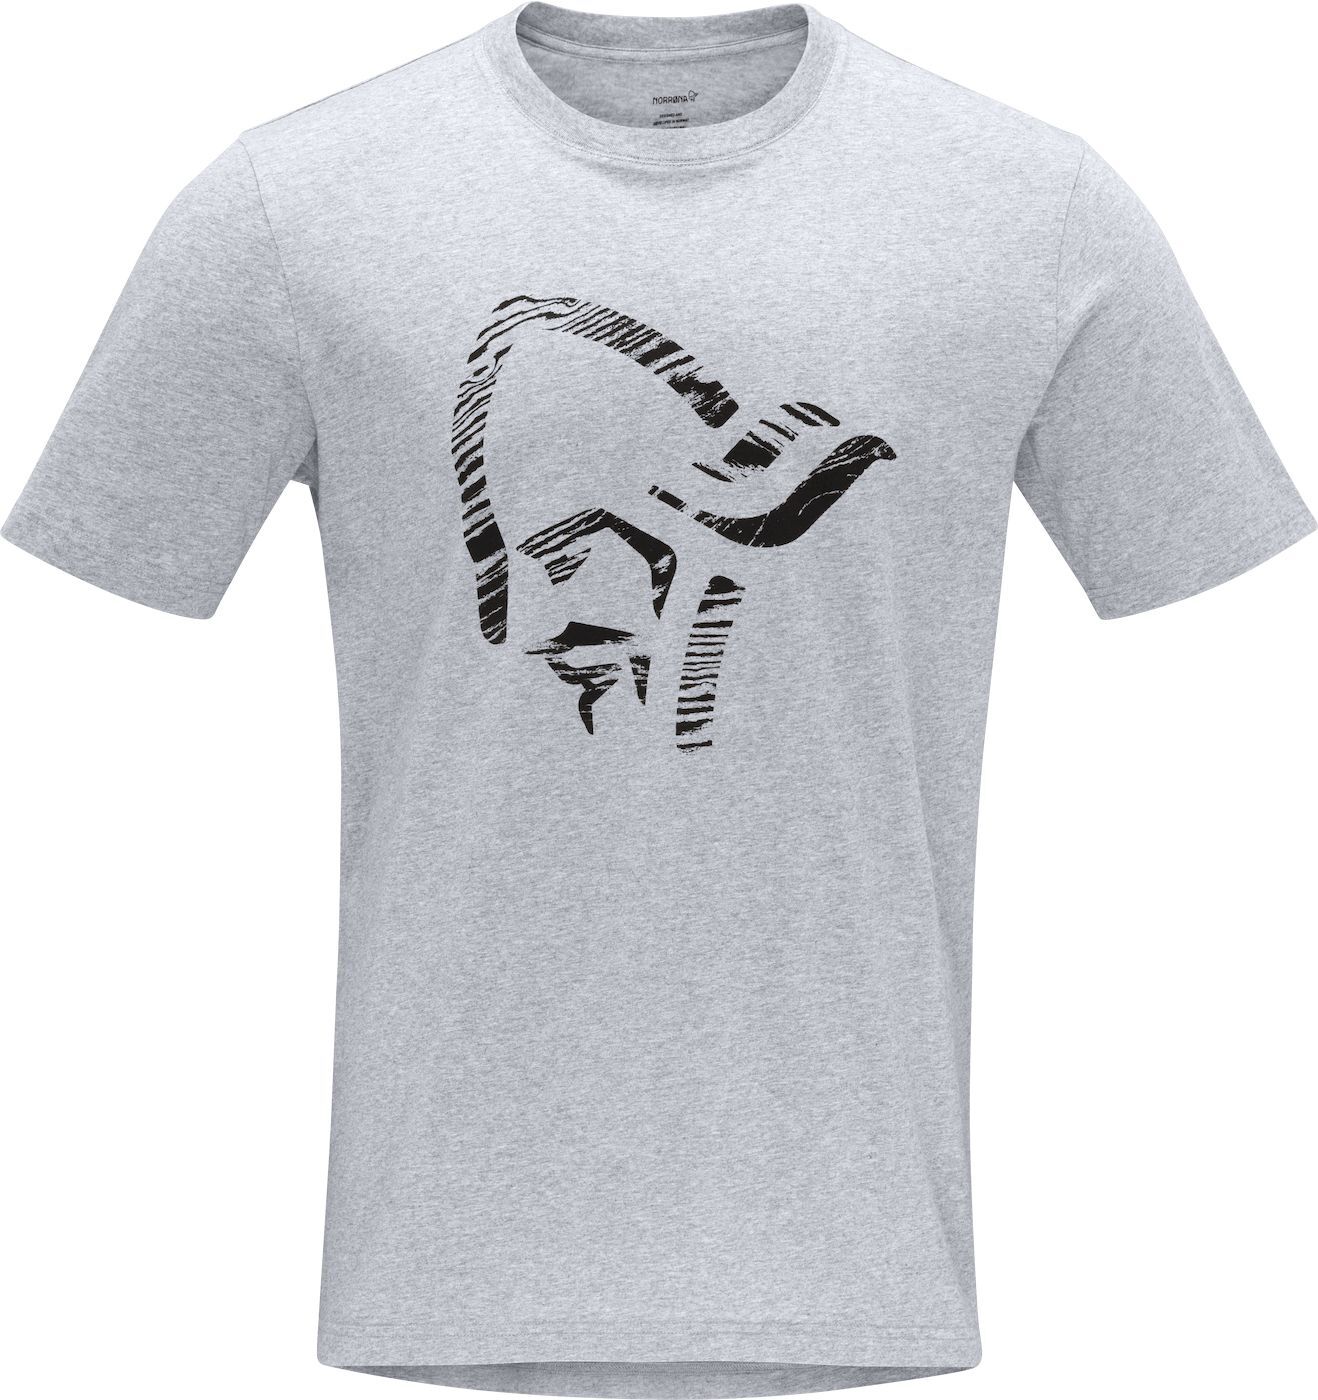 Norrona /29 Cotton Wood Viking T-Shirt - T-shirt - Men's